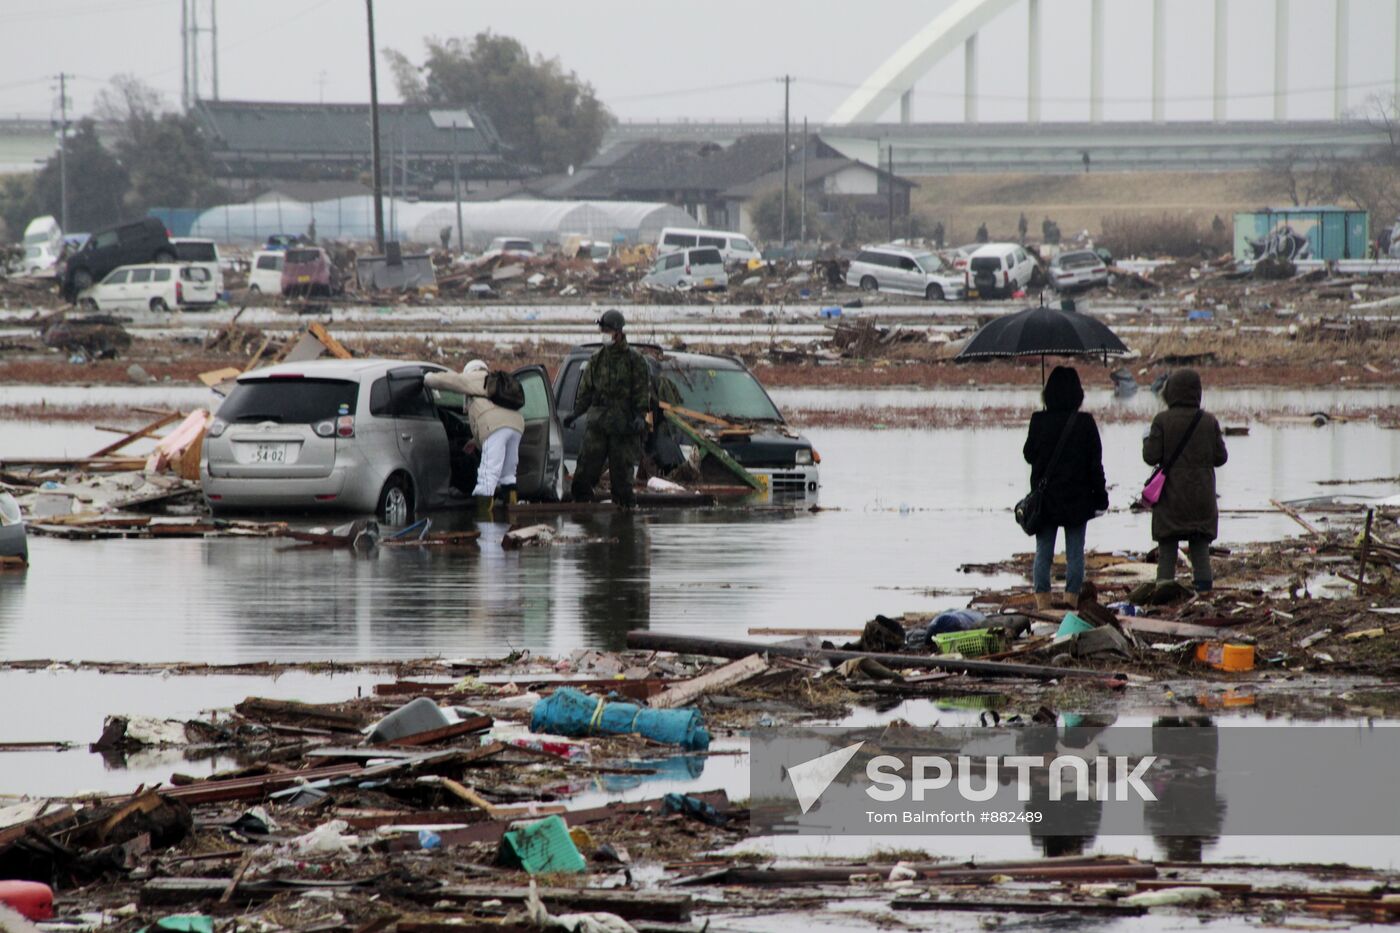 Japan: earthquake aftermath